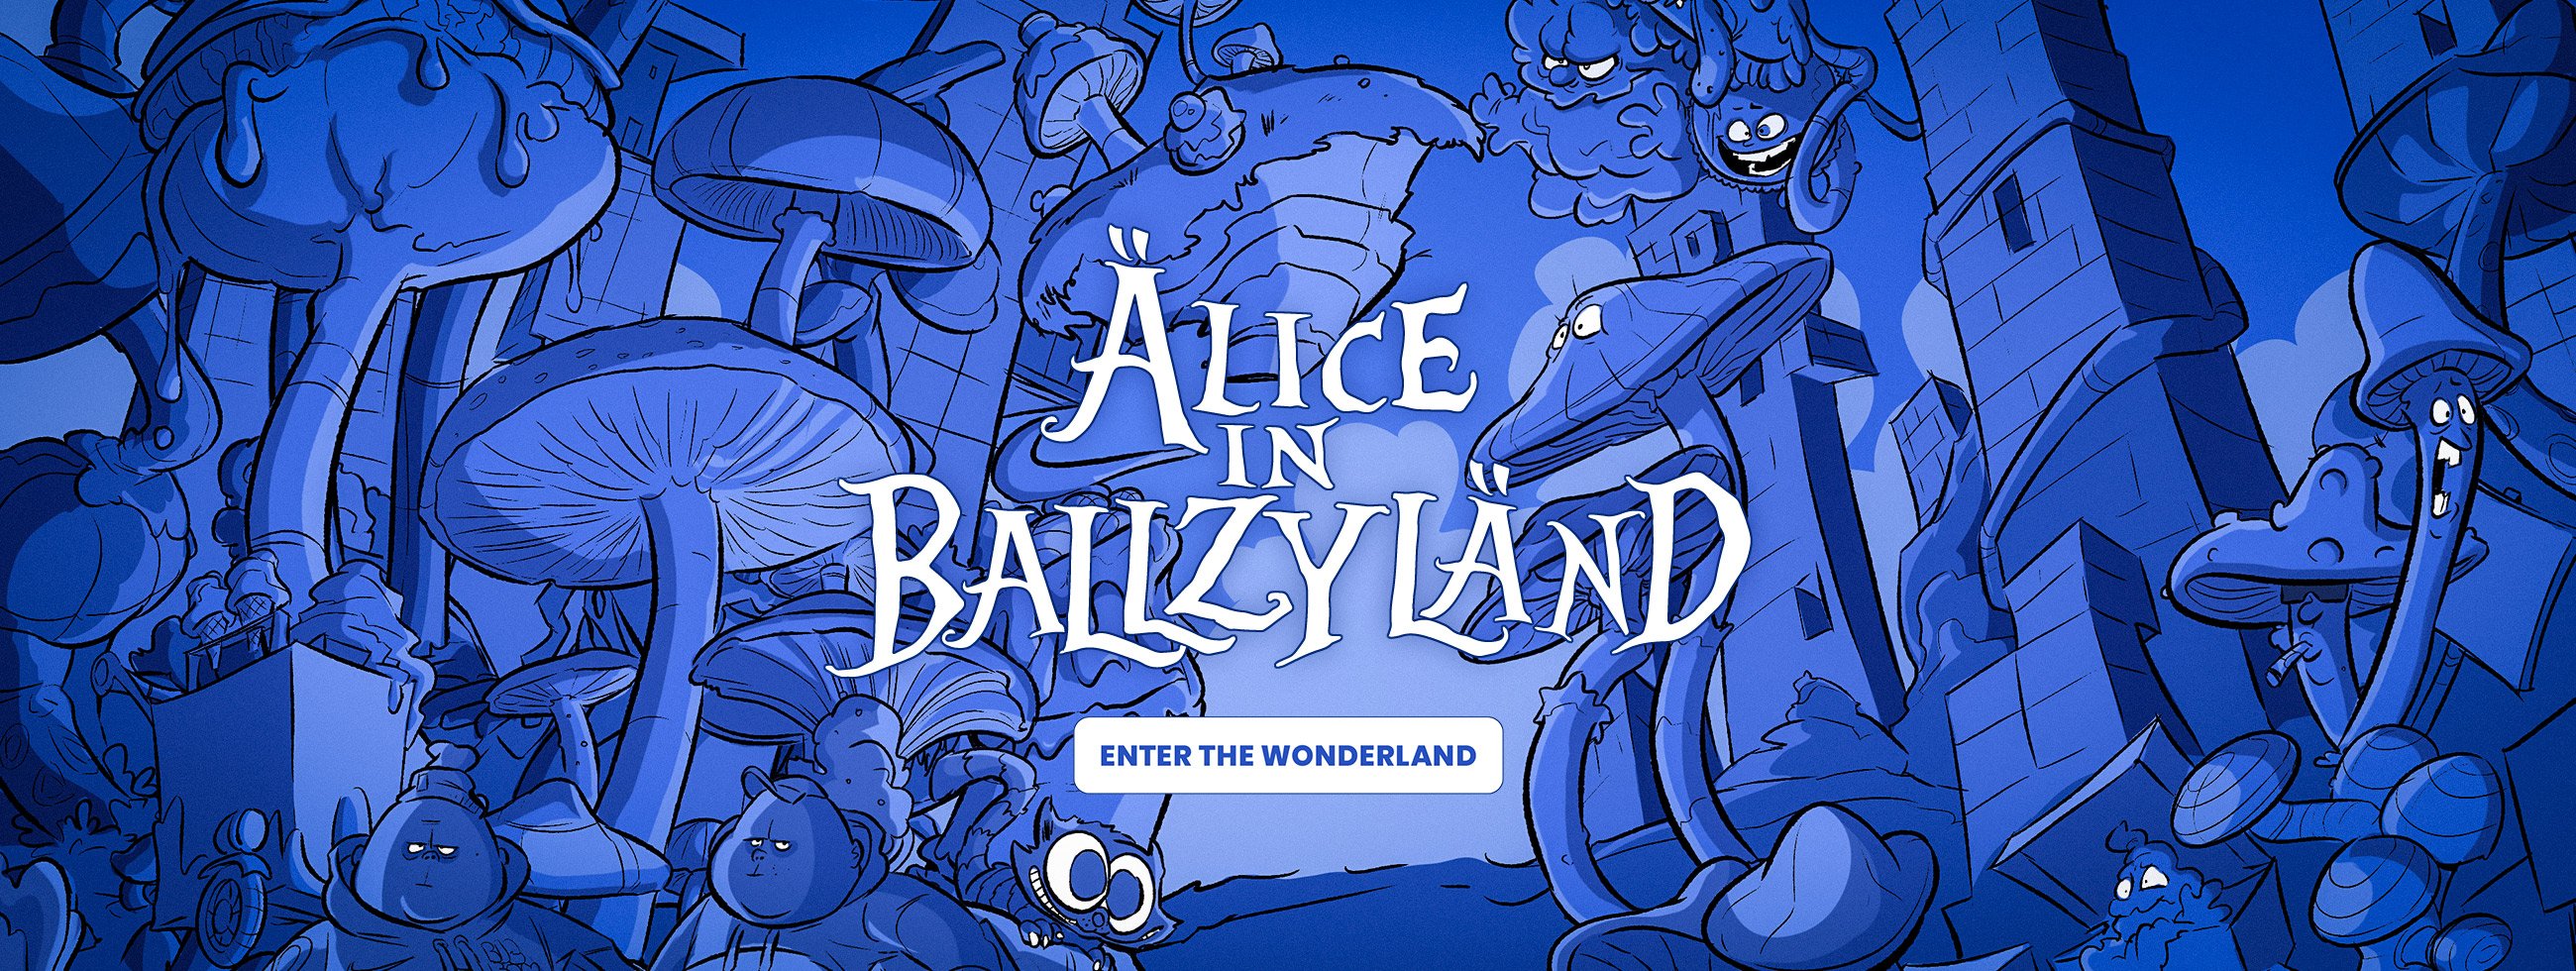 Alice in Ballzyland - EE